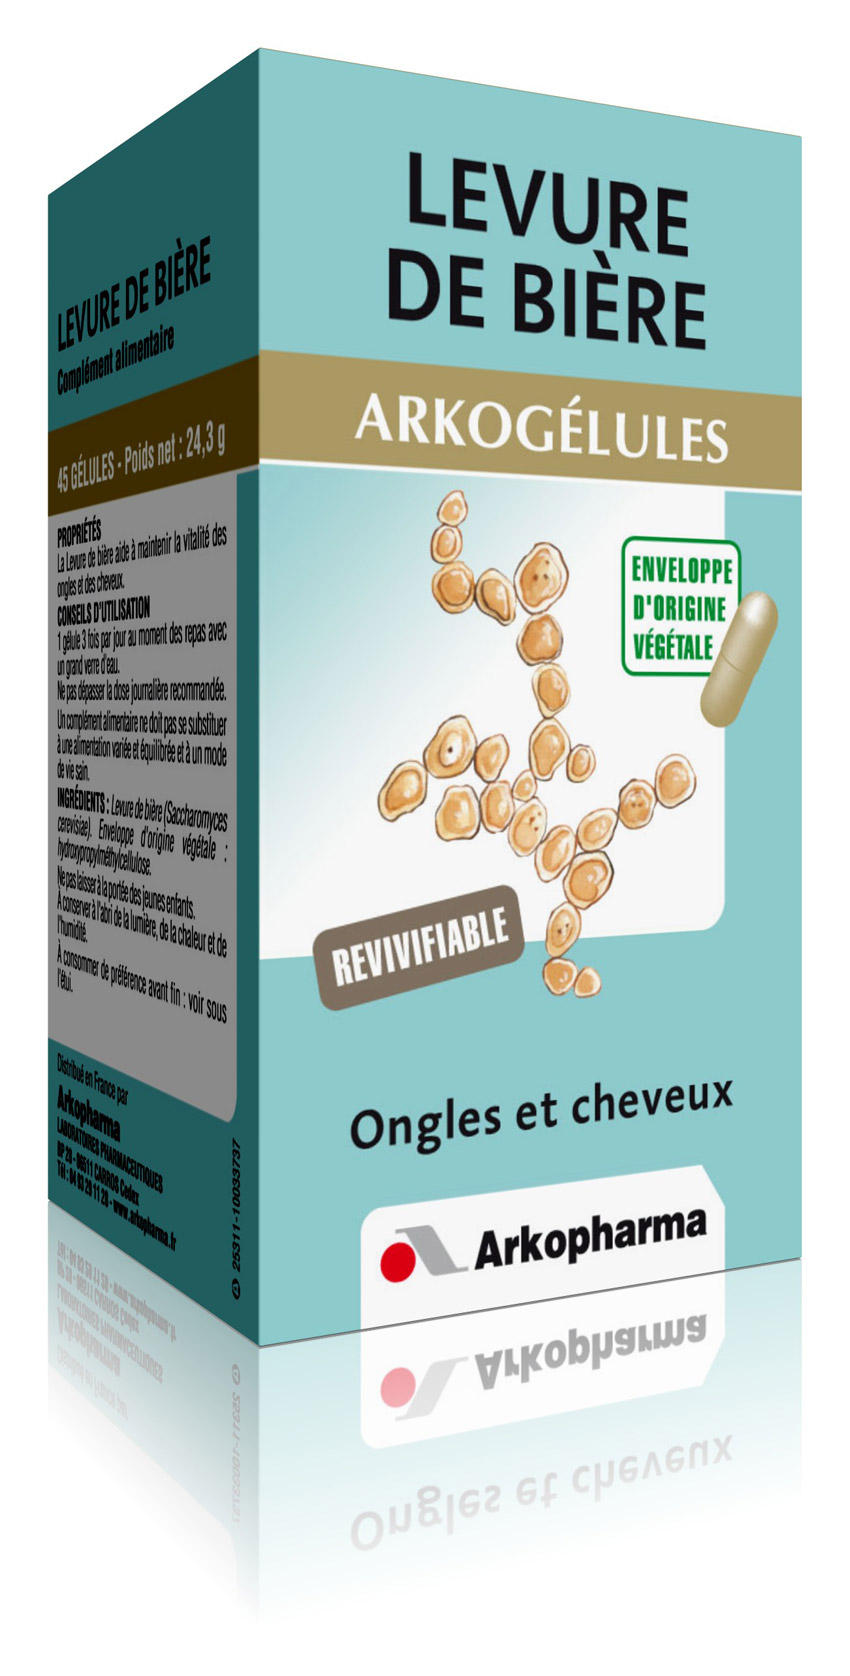 https://www.pharmacieauquotidien.com/images/Image/arkogelules-levure-de-biere-big_1364048257.jpg